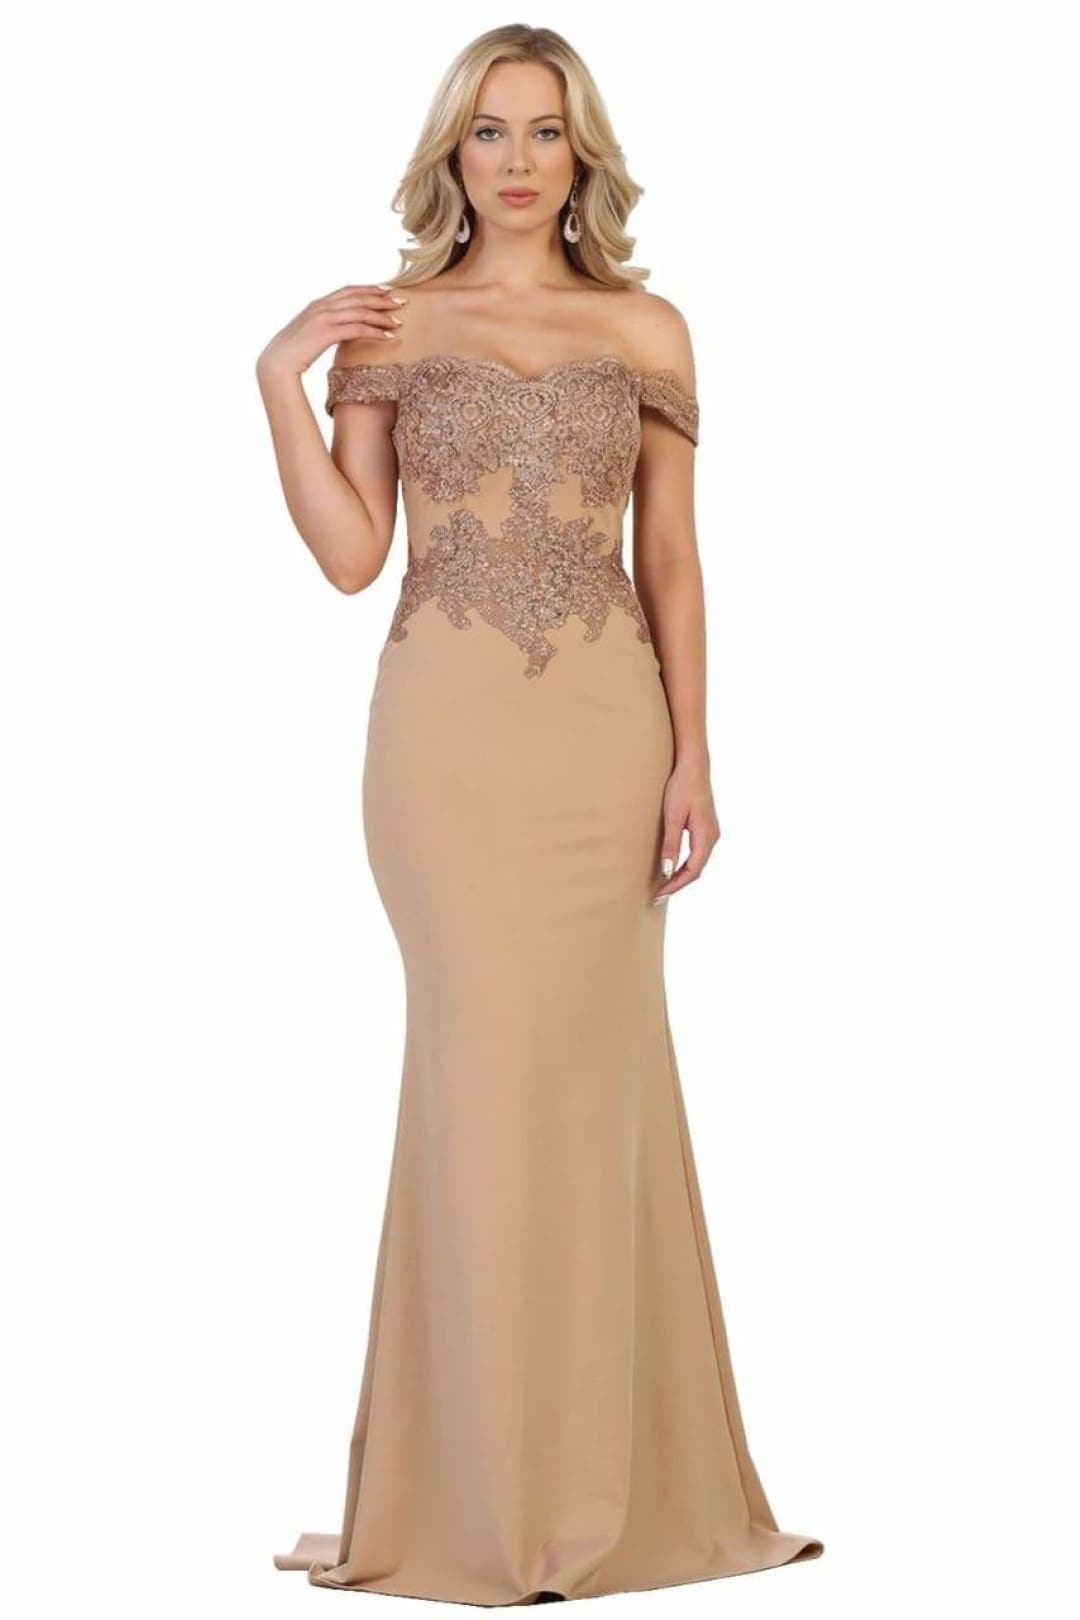 Elegant Form Fitting Evening Dress1 - Champagne / 2